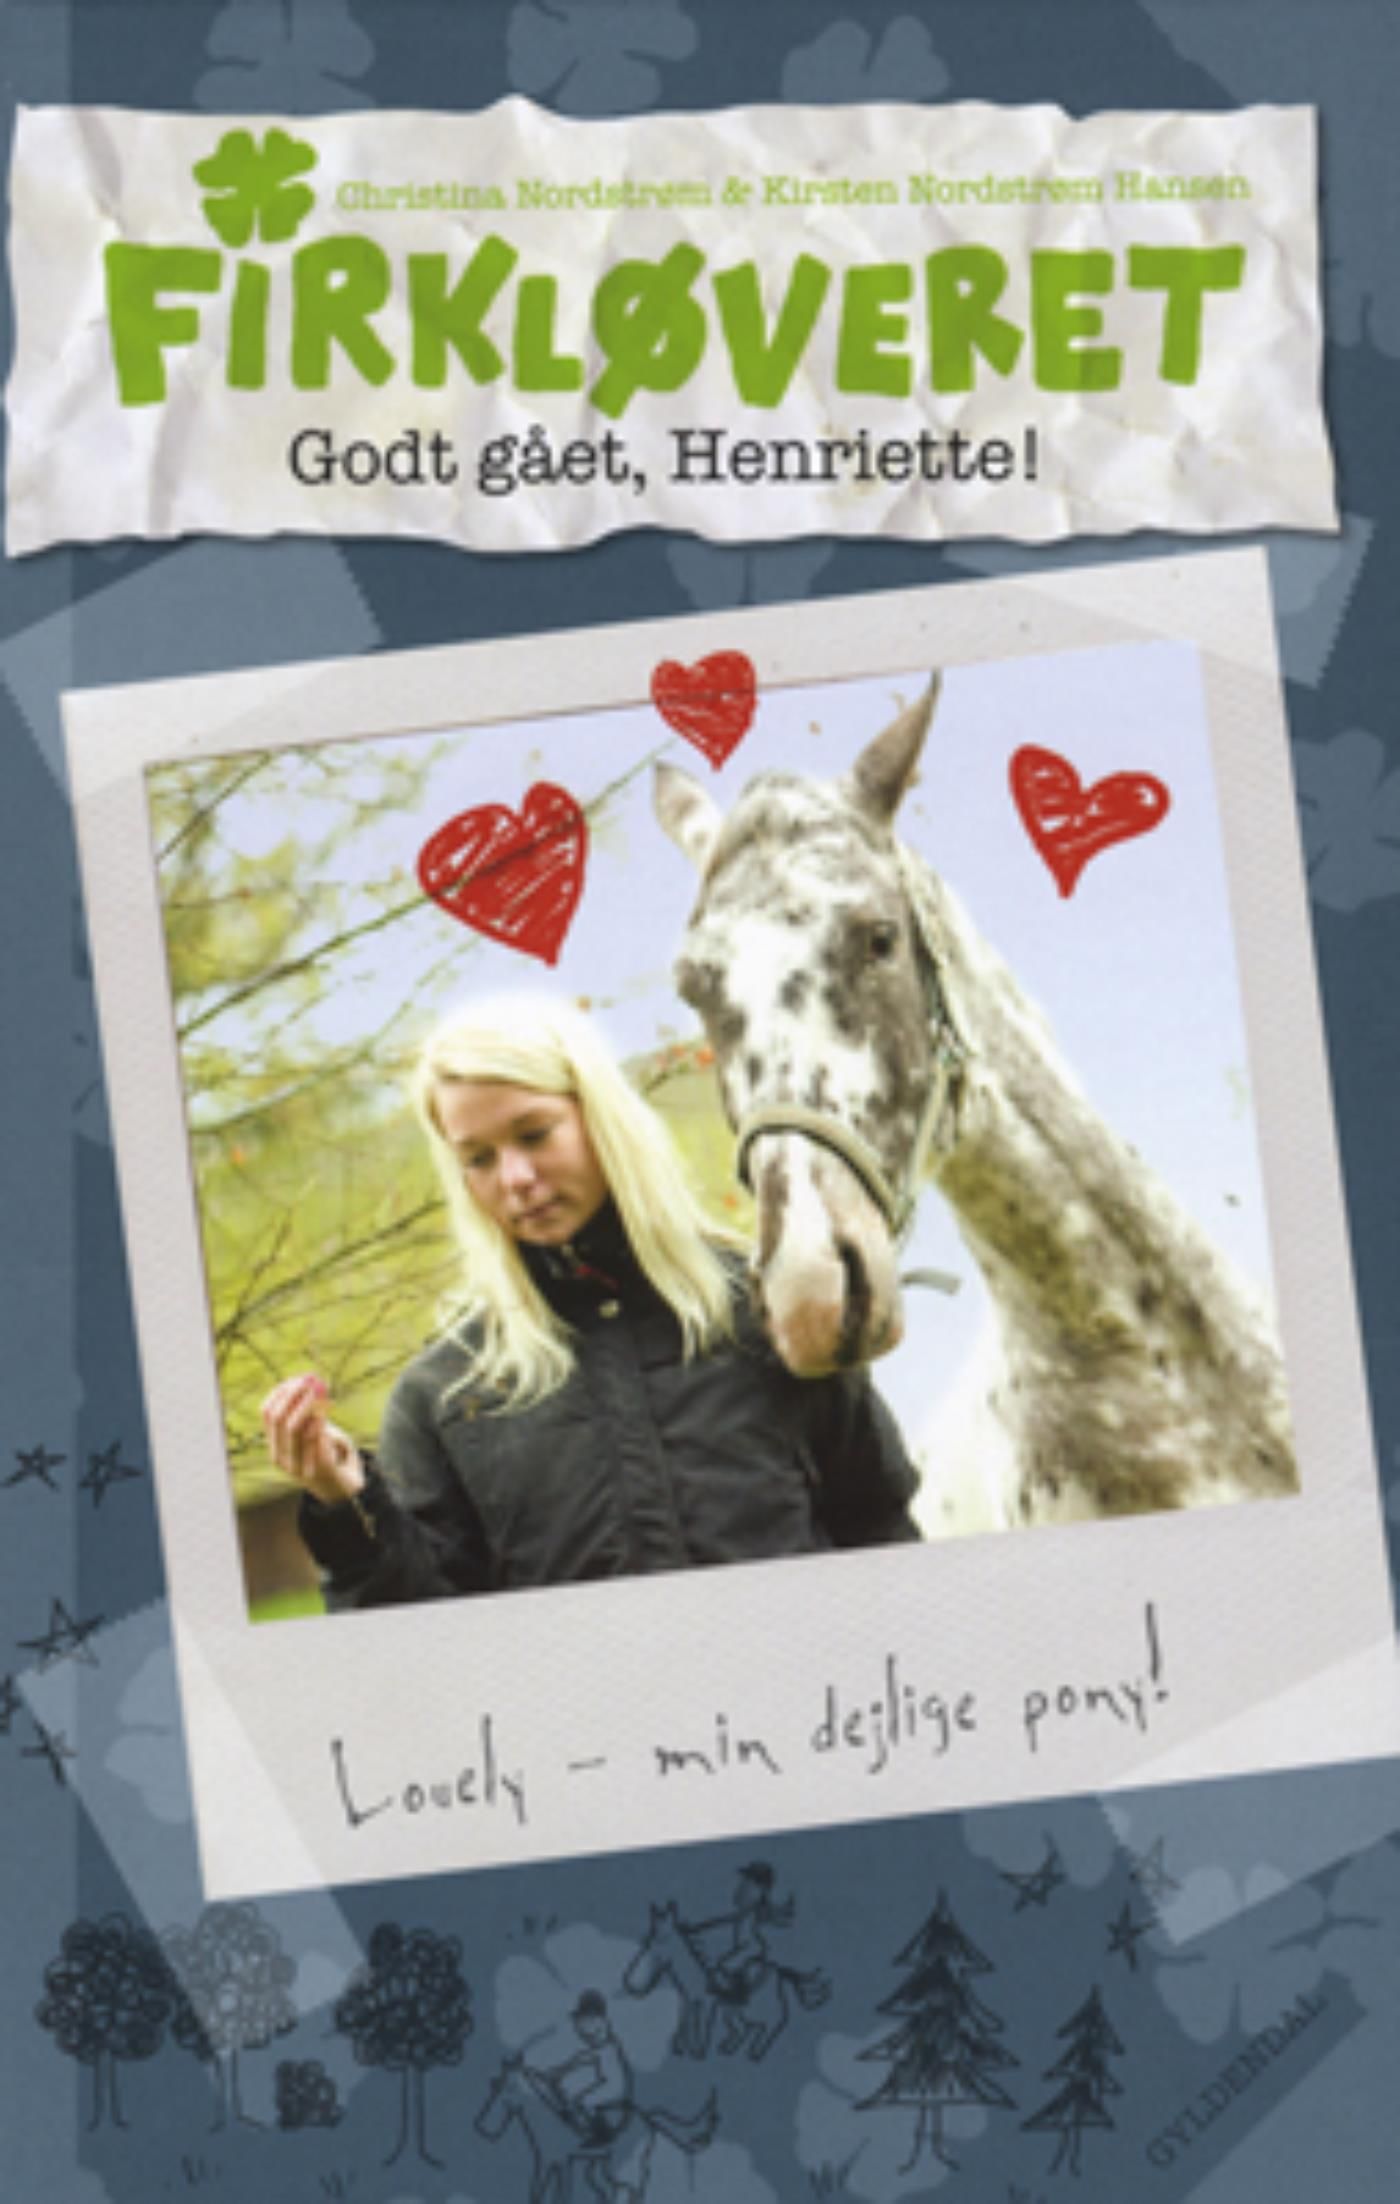 Firkløveret 3 - Godt gået, Henriette!, e-bok av Kirsten Nordstrøm Hansen, Christina Nordstrøm